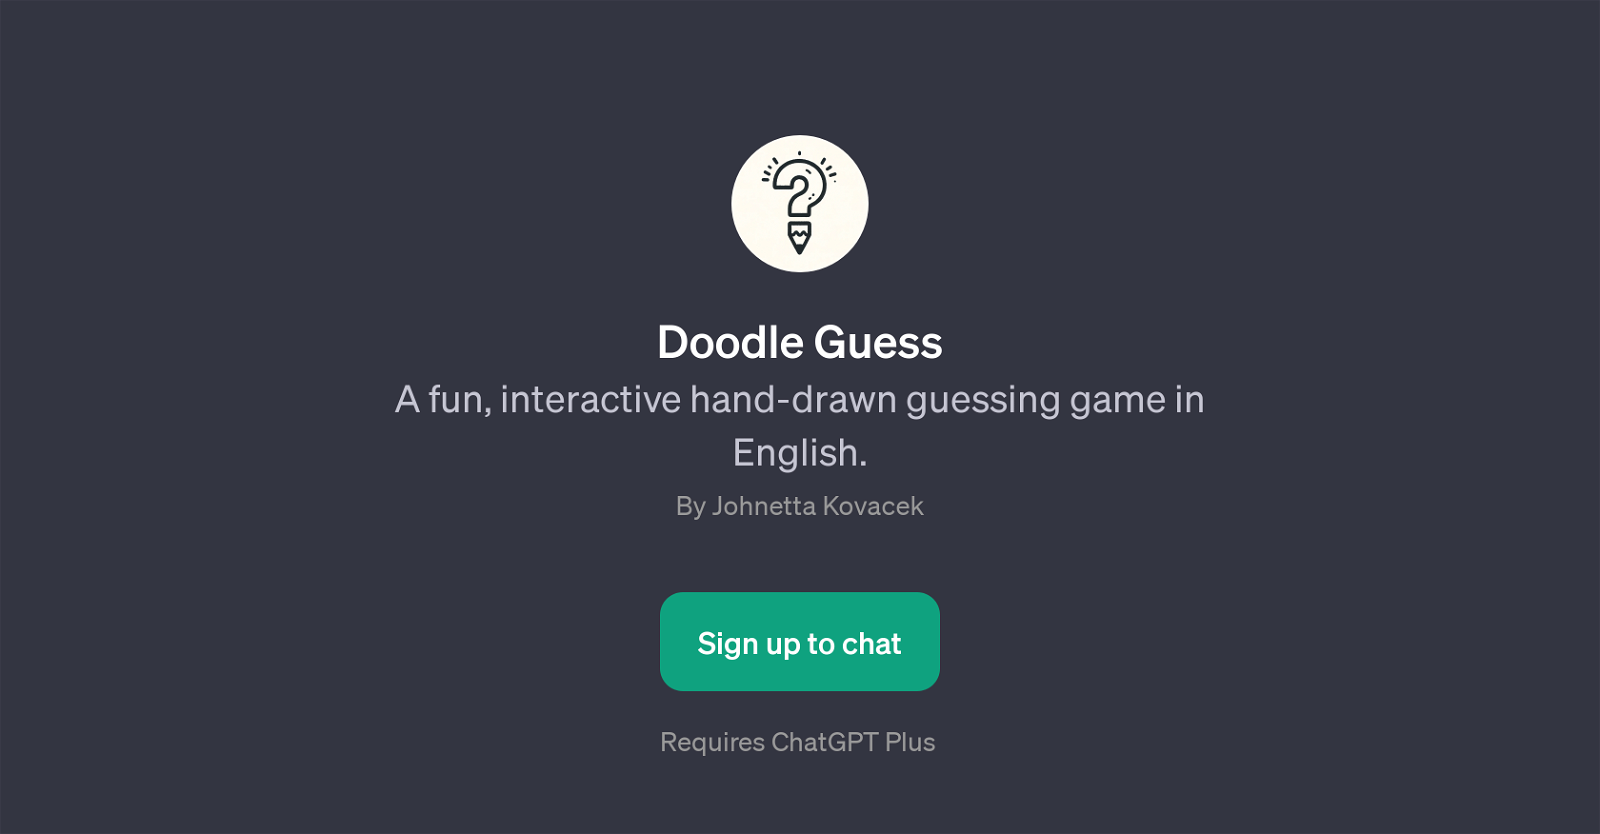 Doodle Guess website